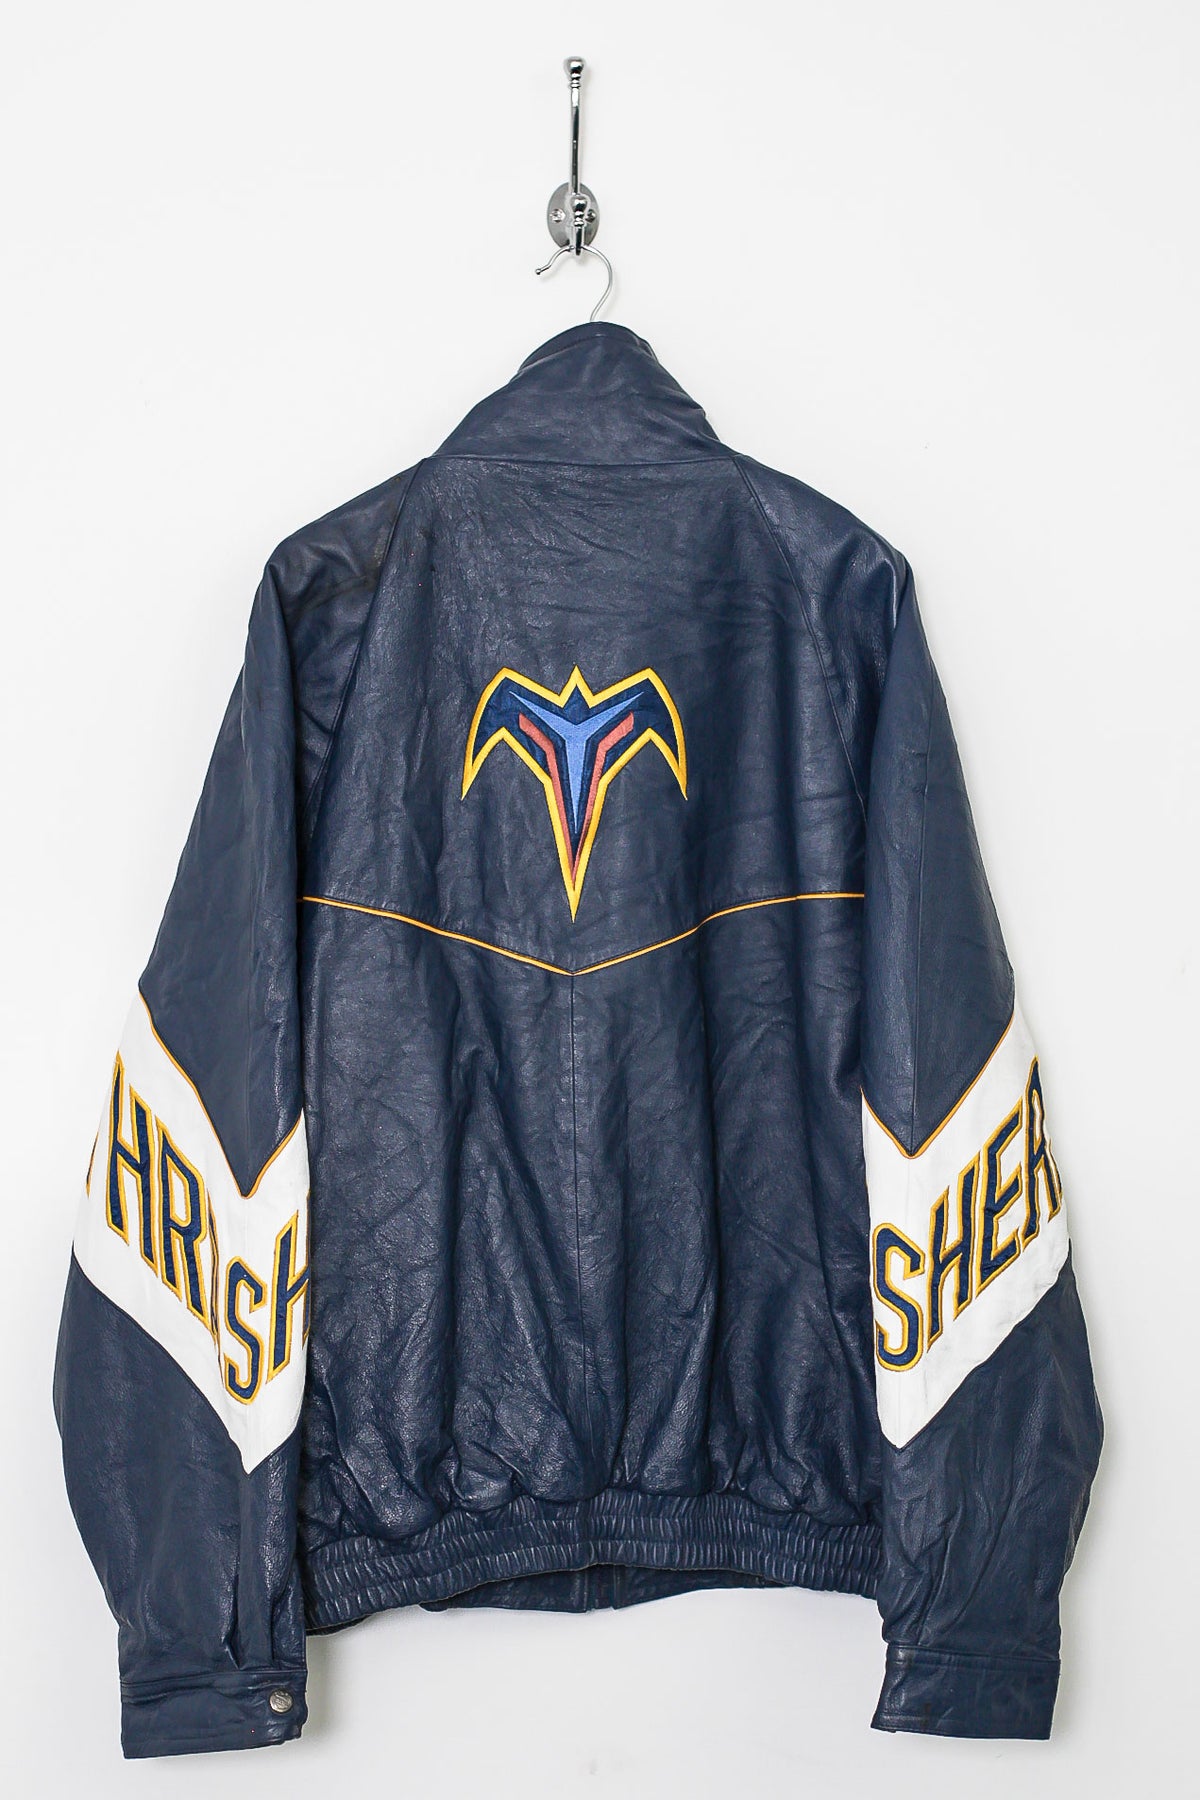 90s NHL Atlanta Thrashers Leather Jacket (XL)